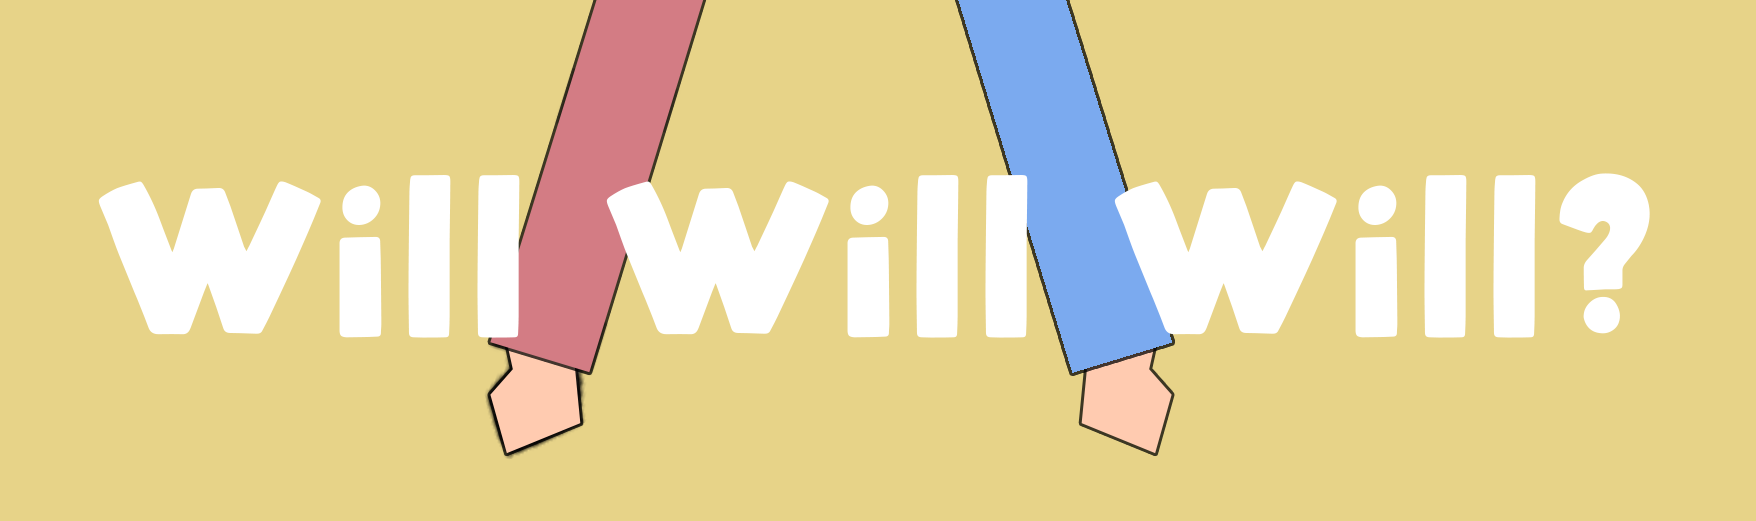 Will Will Will?